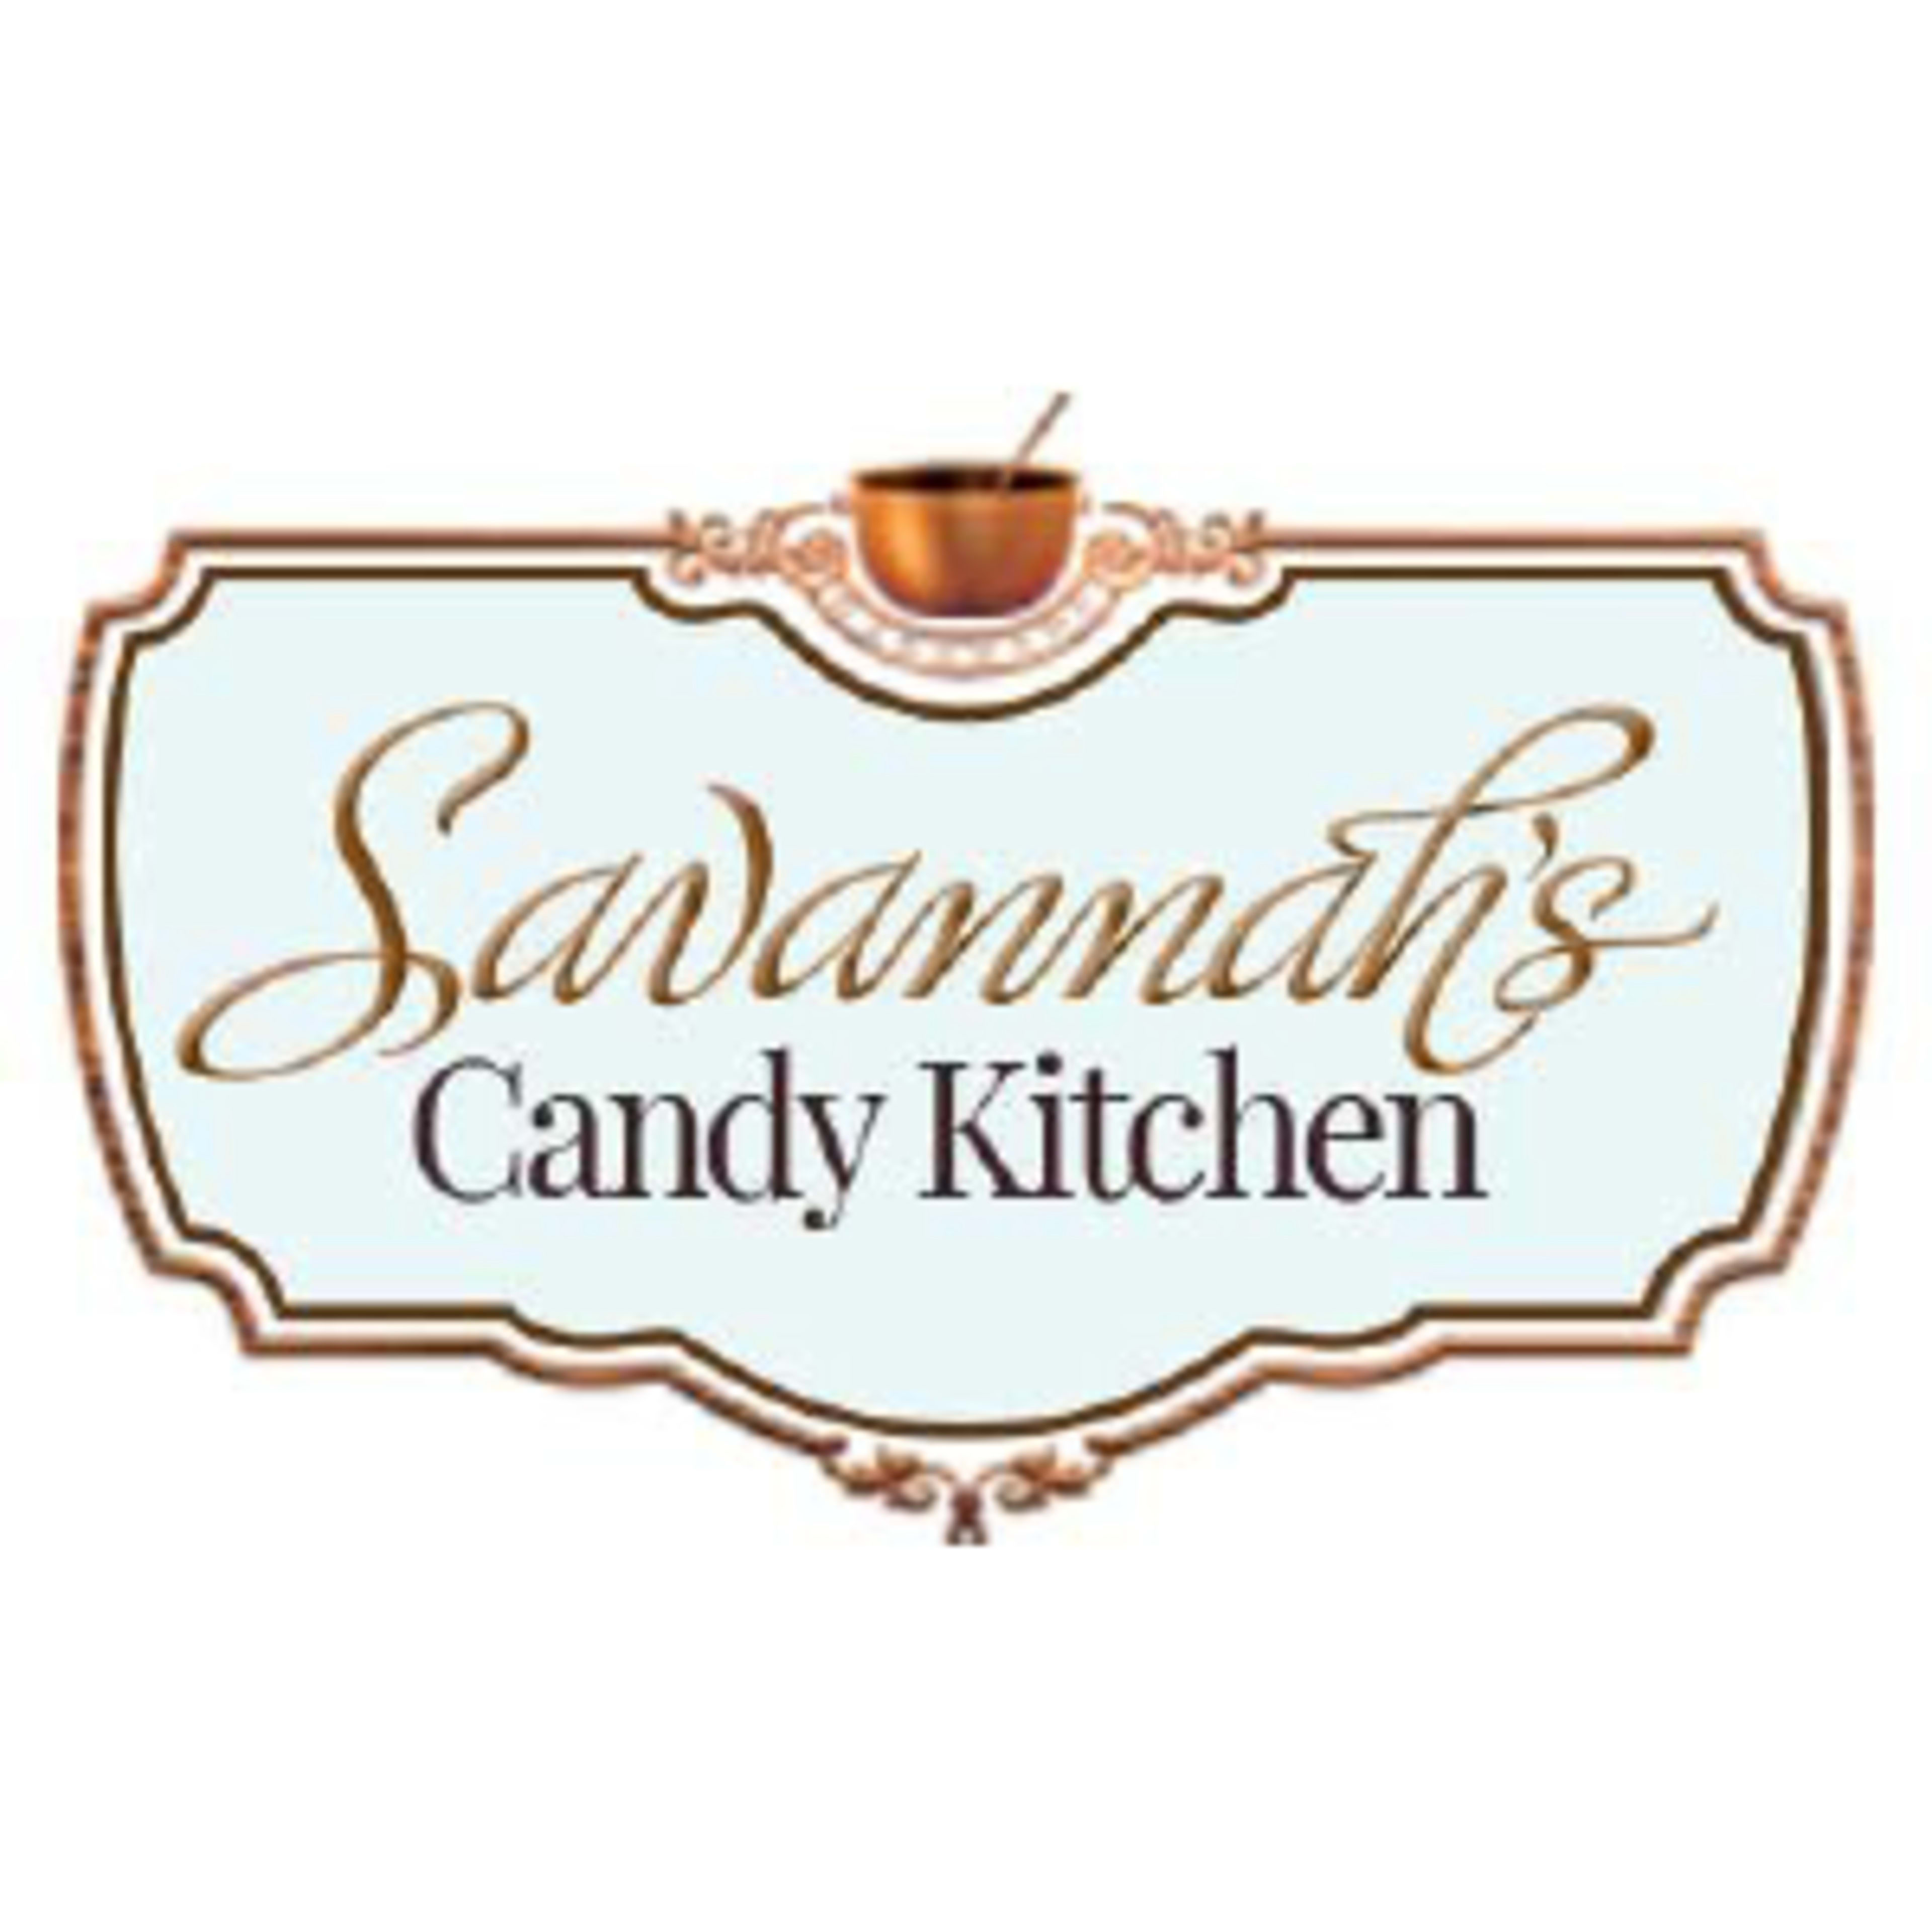 Savannah's Candy Kitchen Code